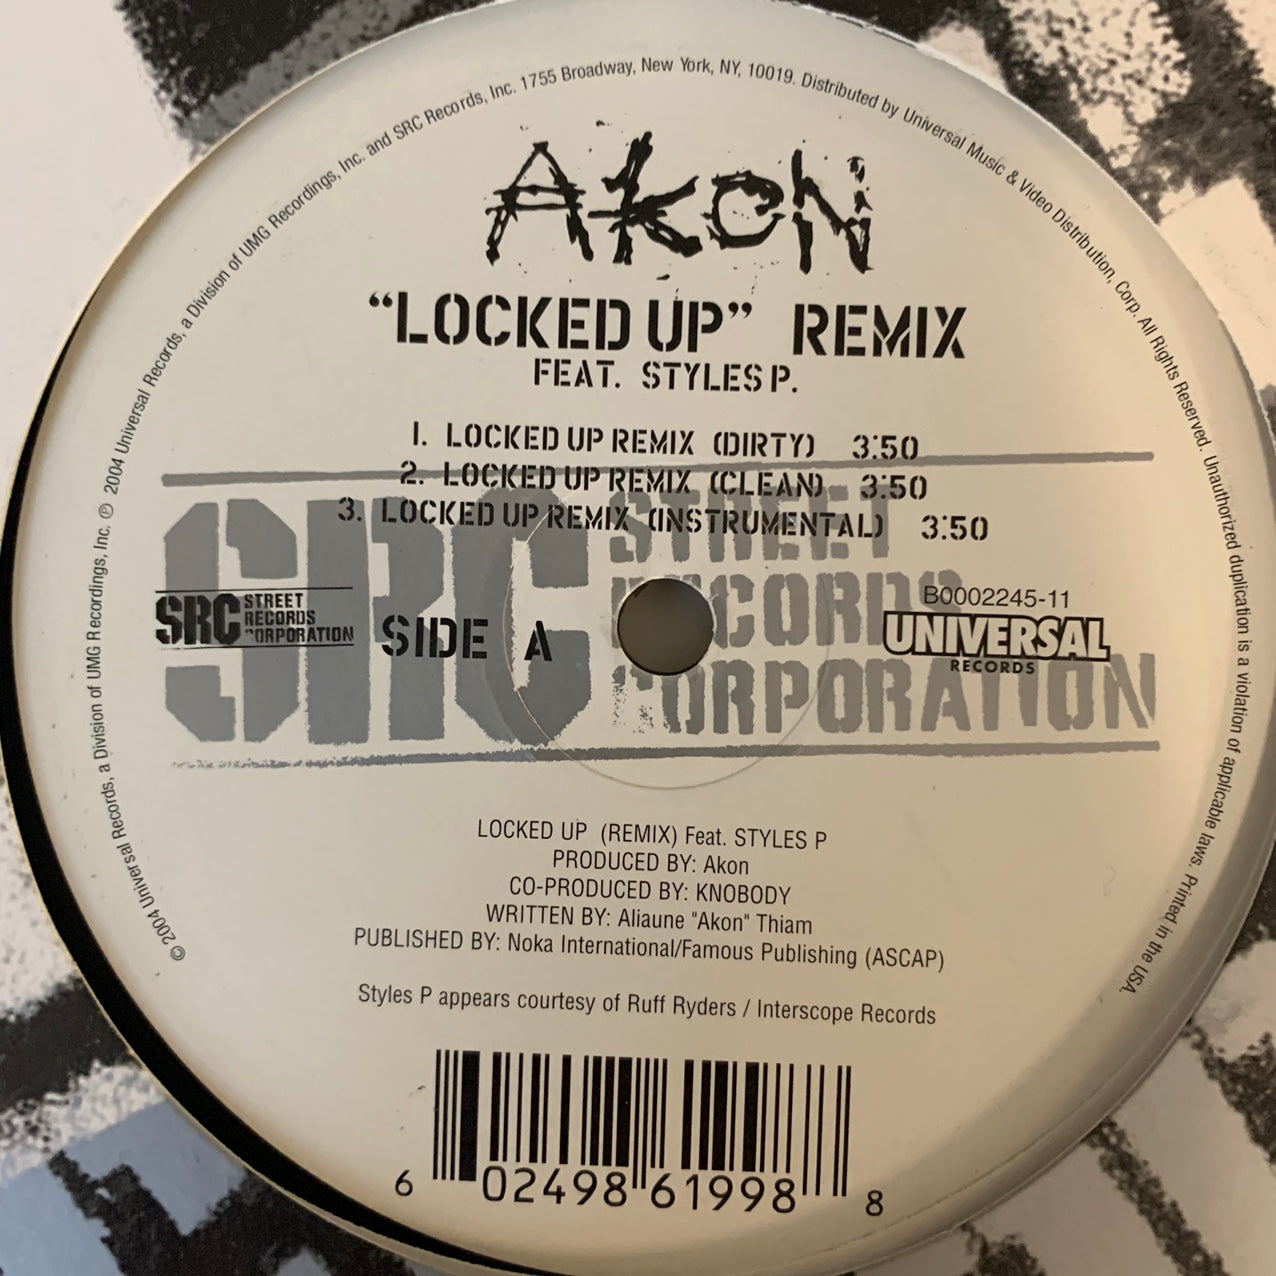 Akon “Locked Up” Feat Styles P 6 Track 12inch Vinyl